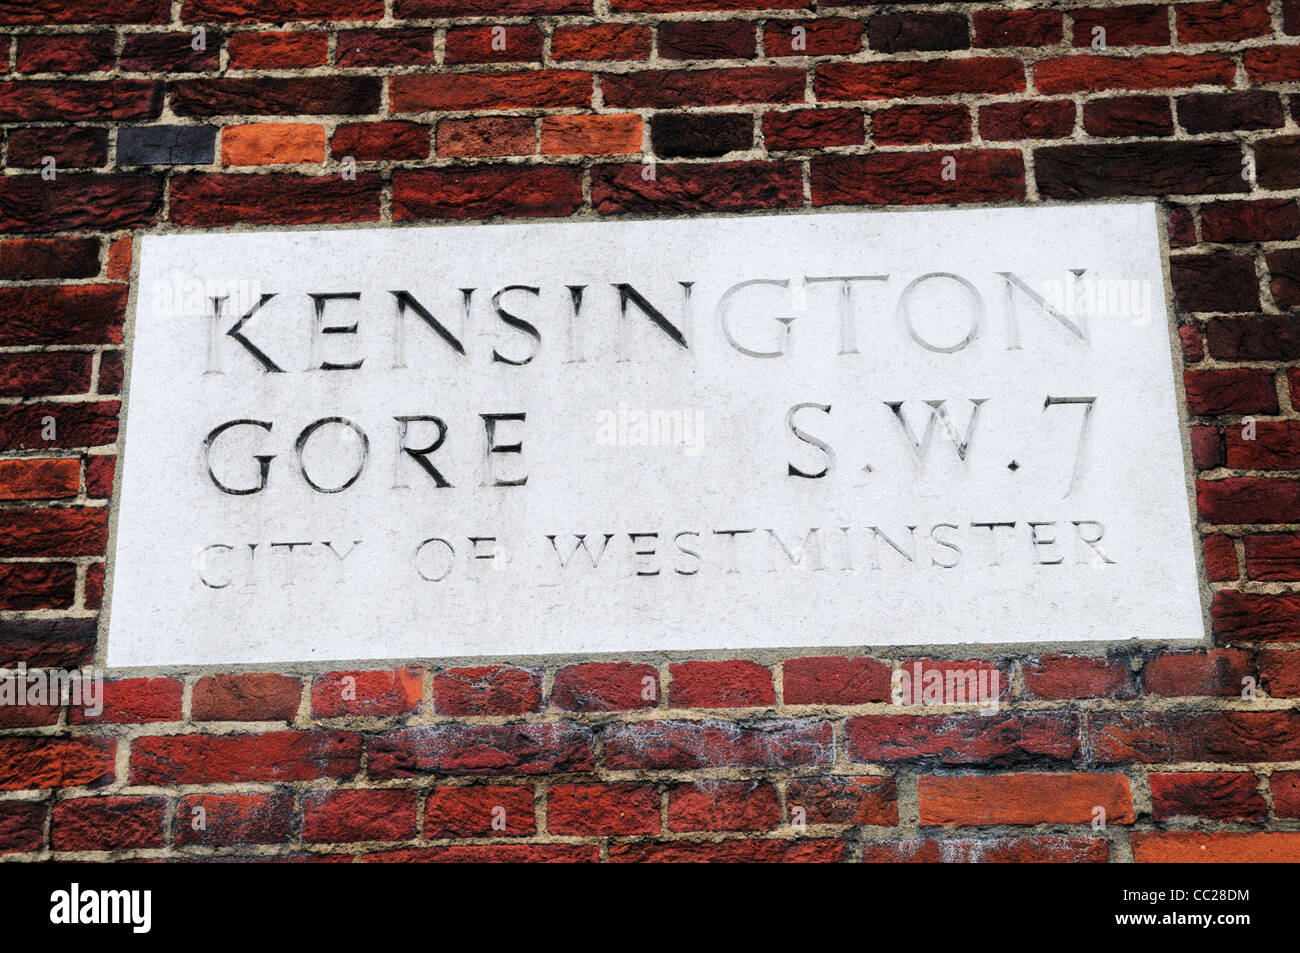 Kensington Gore Street Sign, London, England, UK Stock Photo